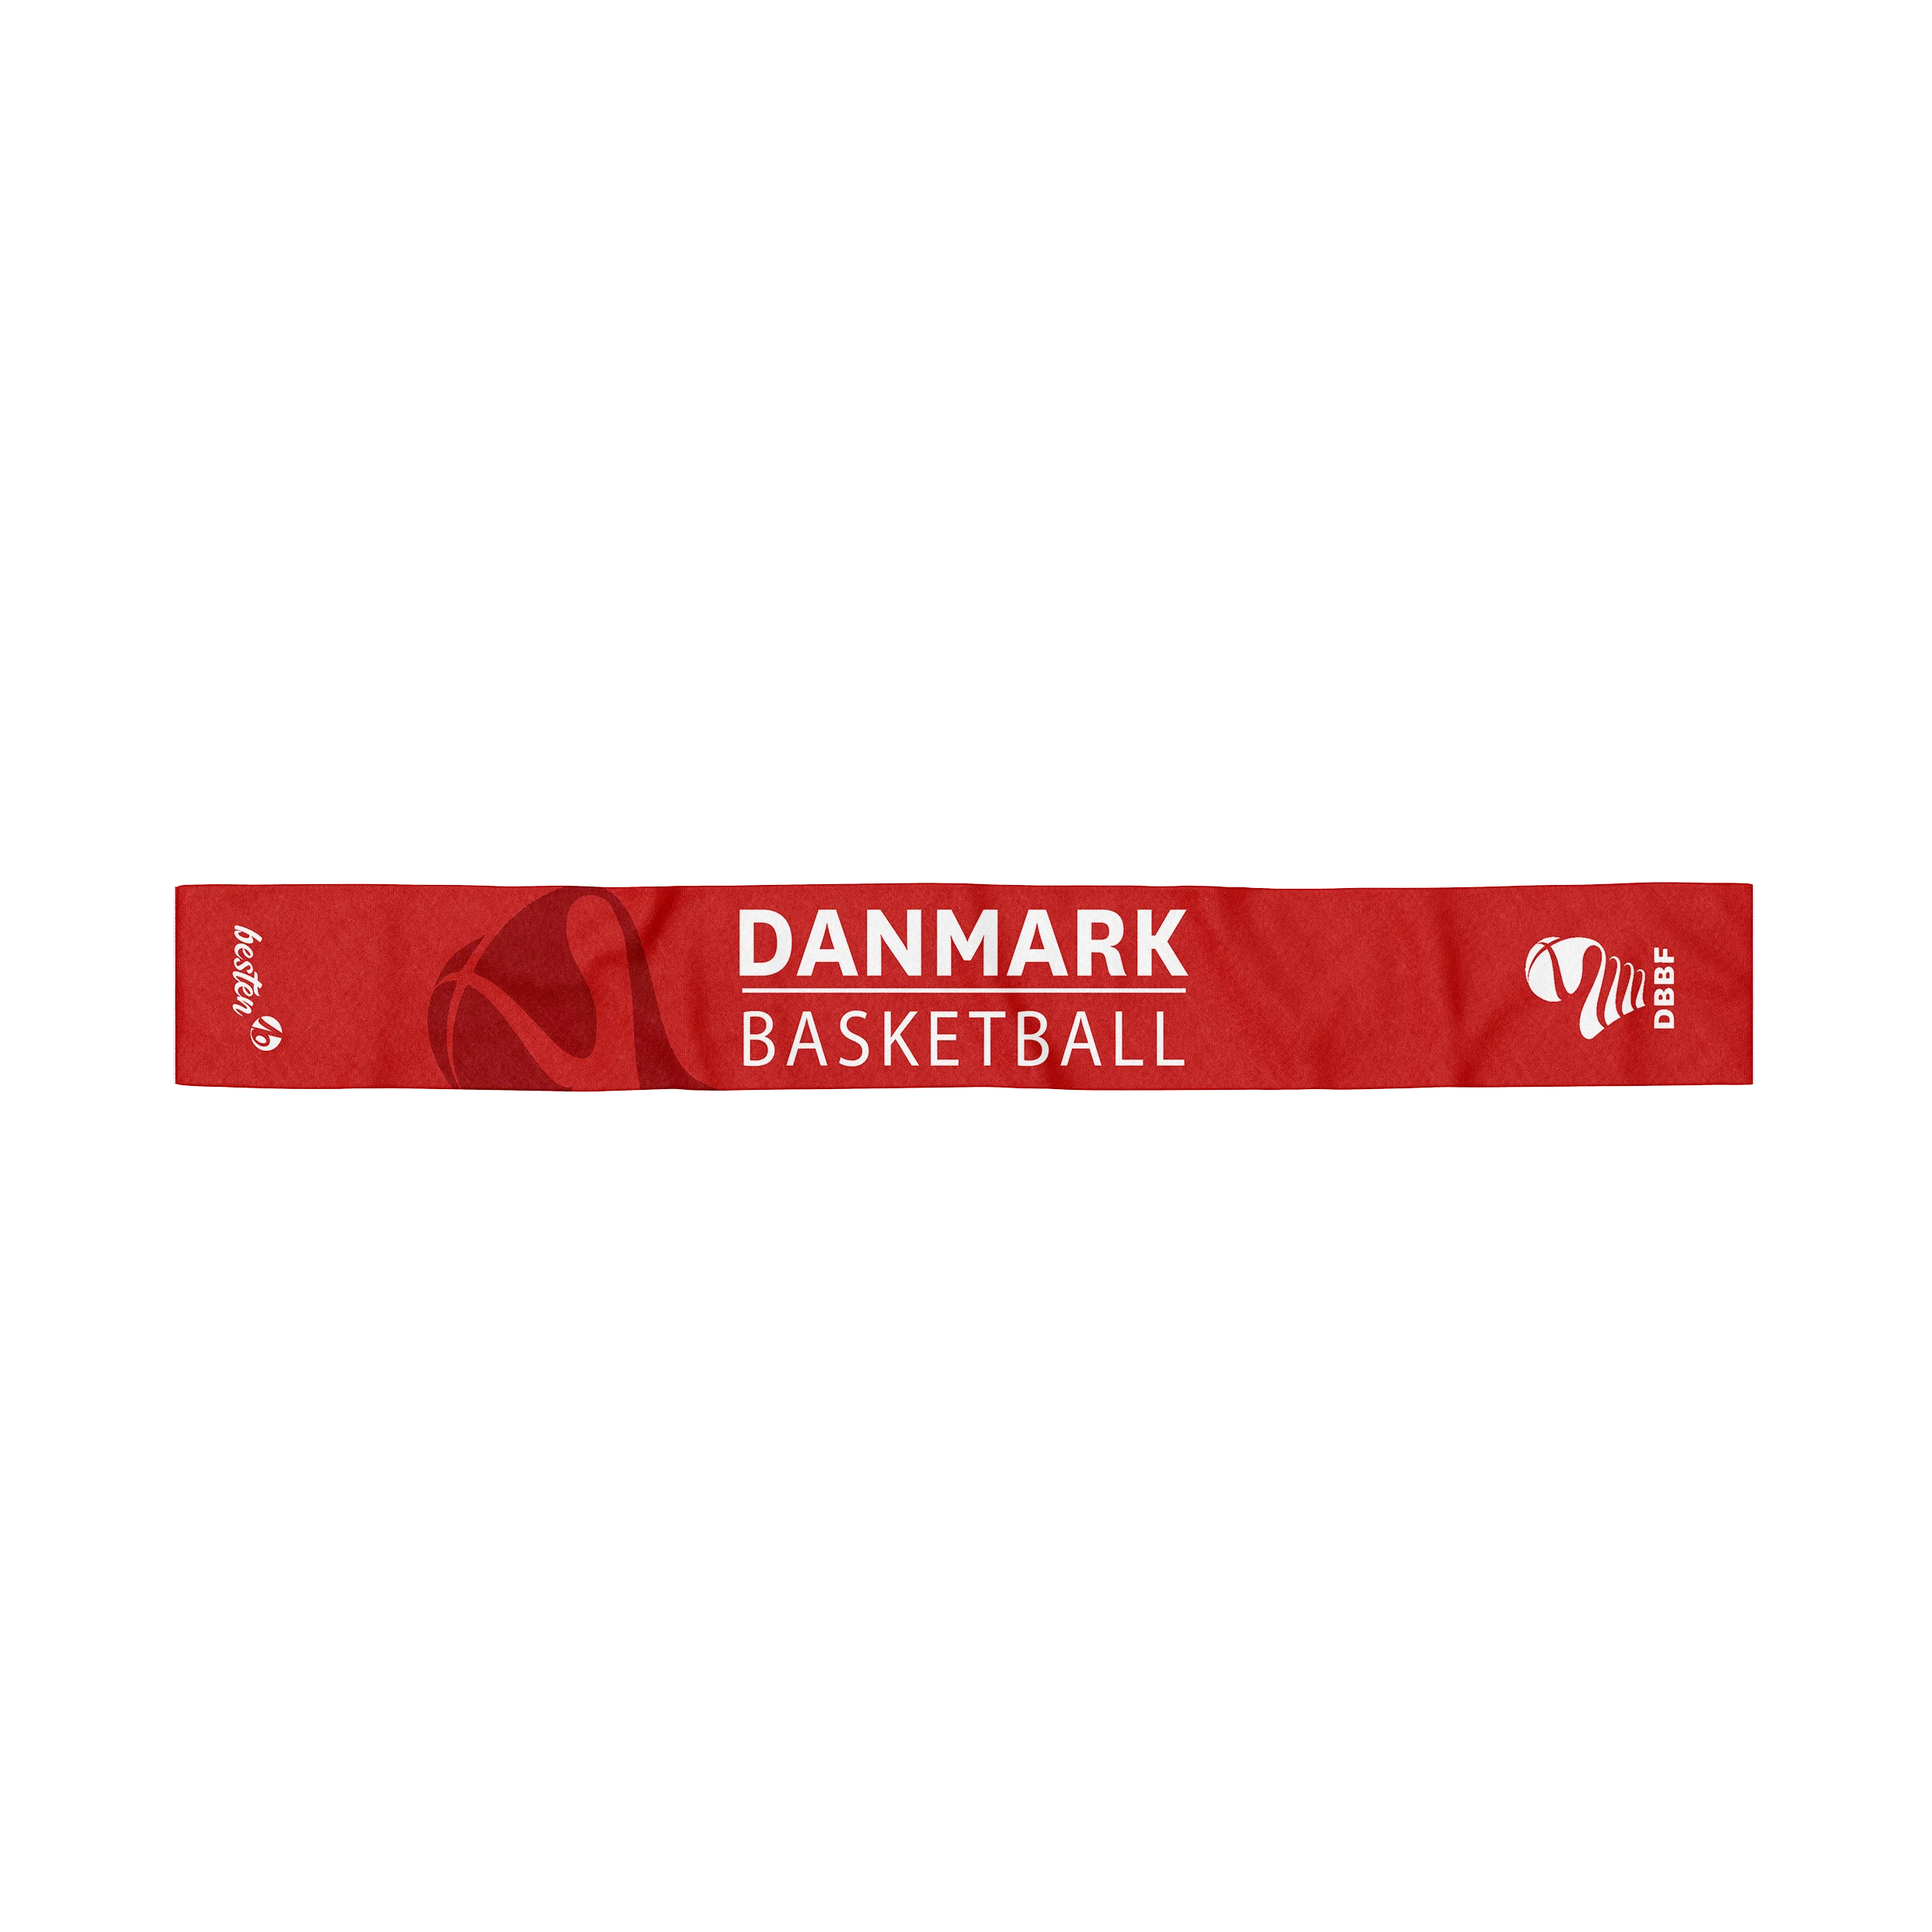 Dinamarca Merchandising bufanda baloncesto